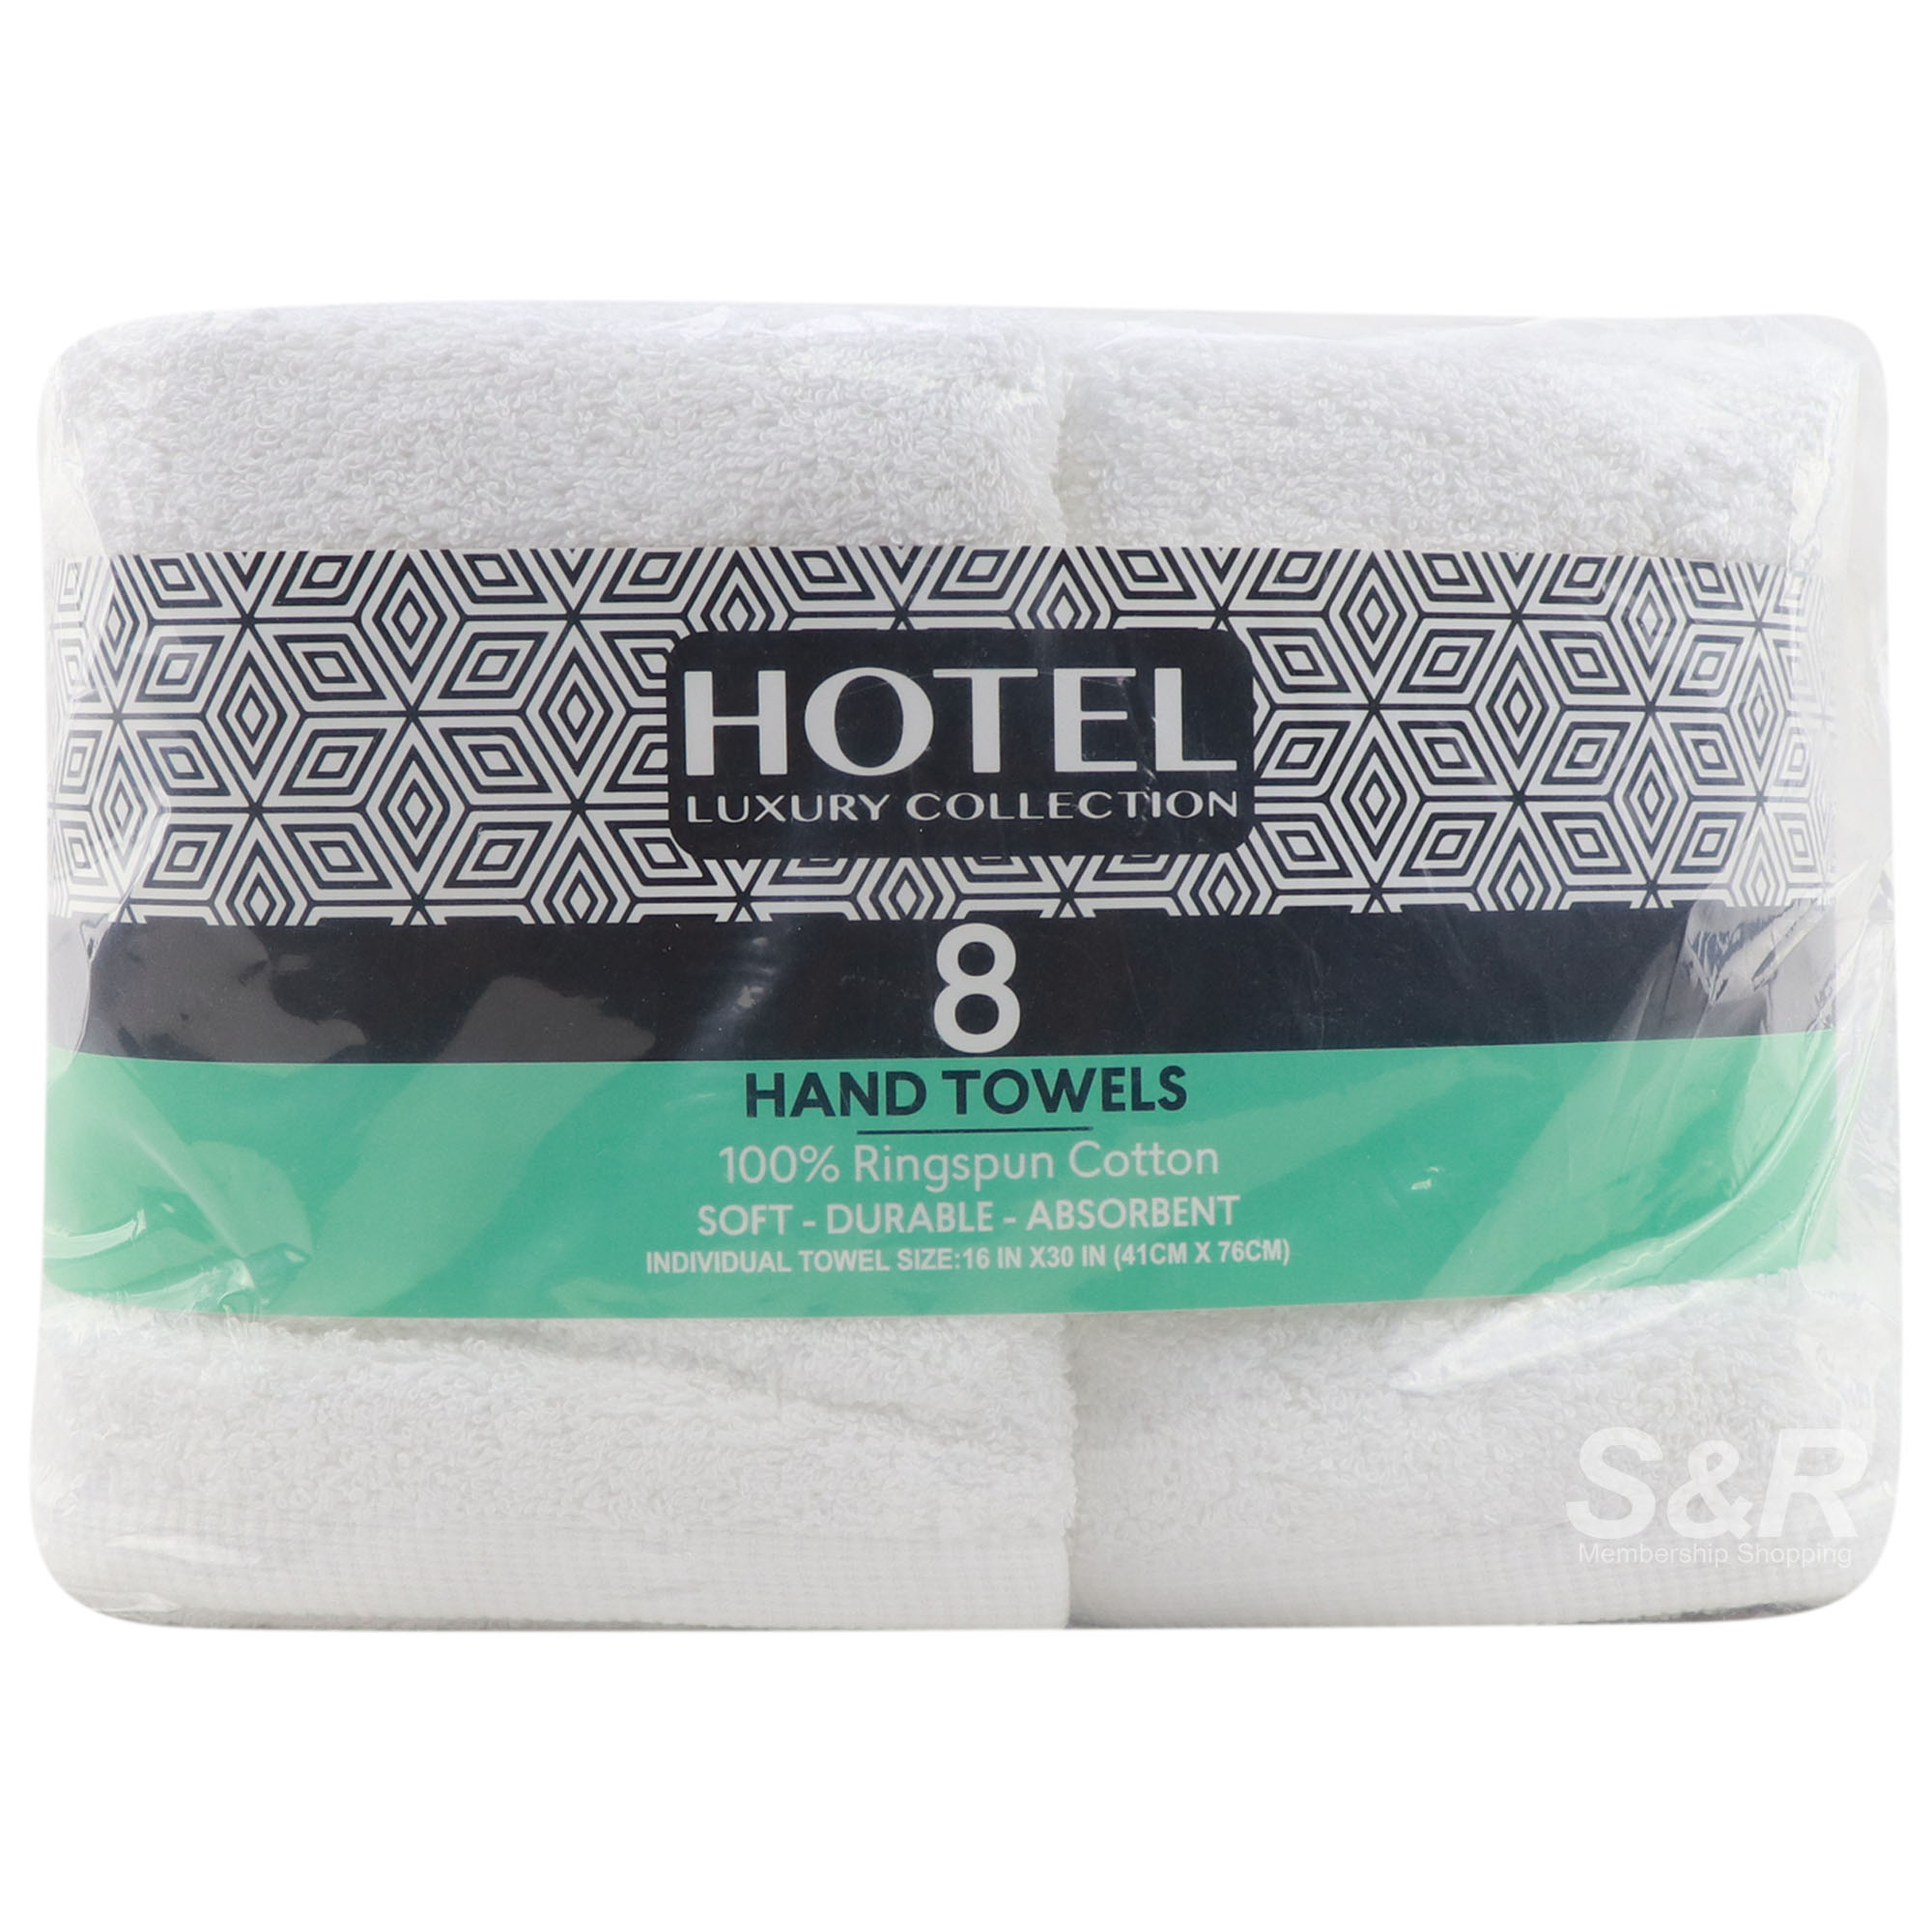 Hotel Luxury Collection Hand Towel Medium Size 8pcs